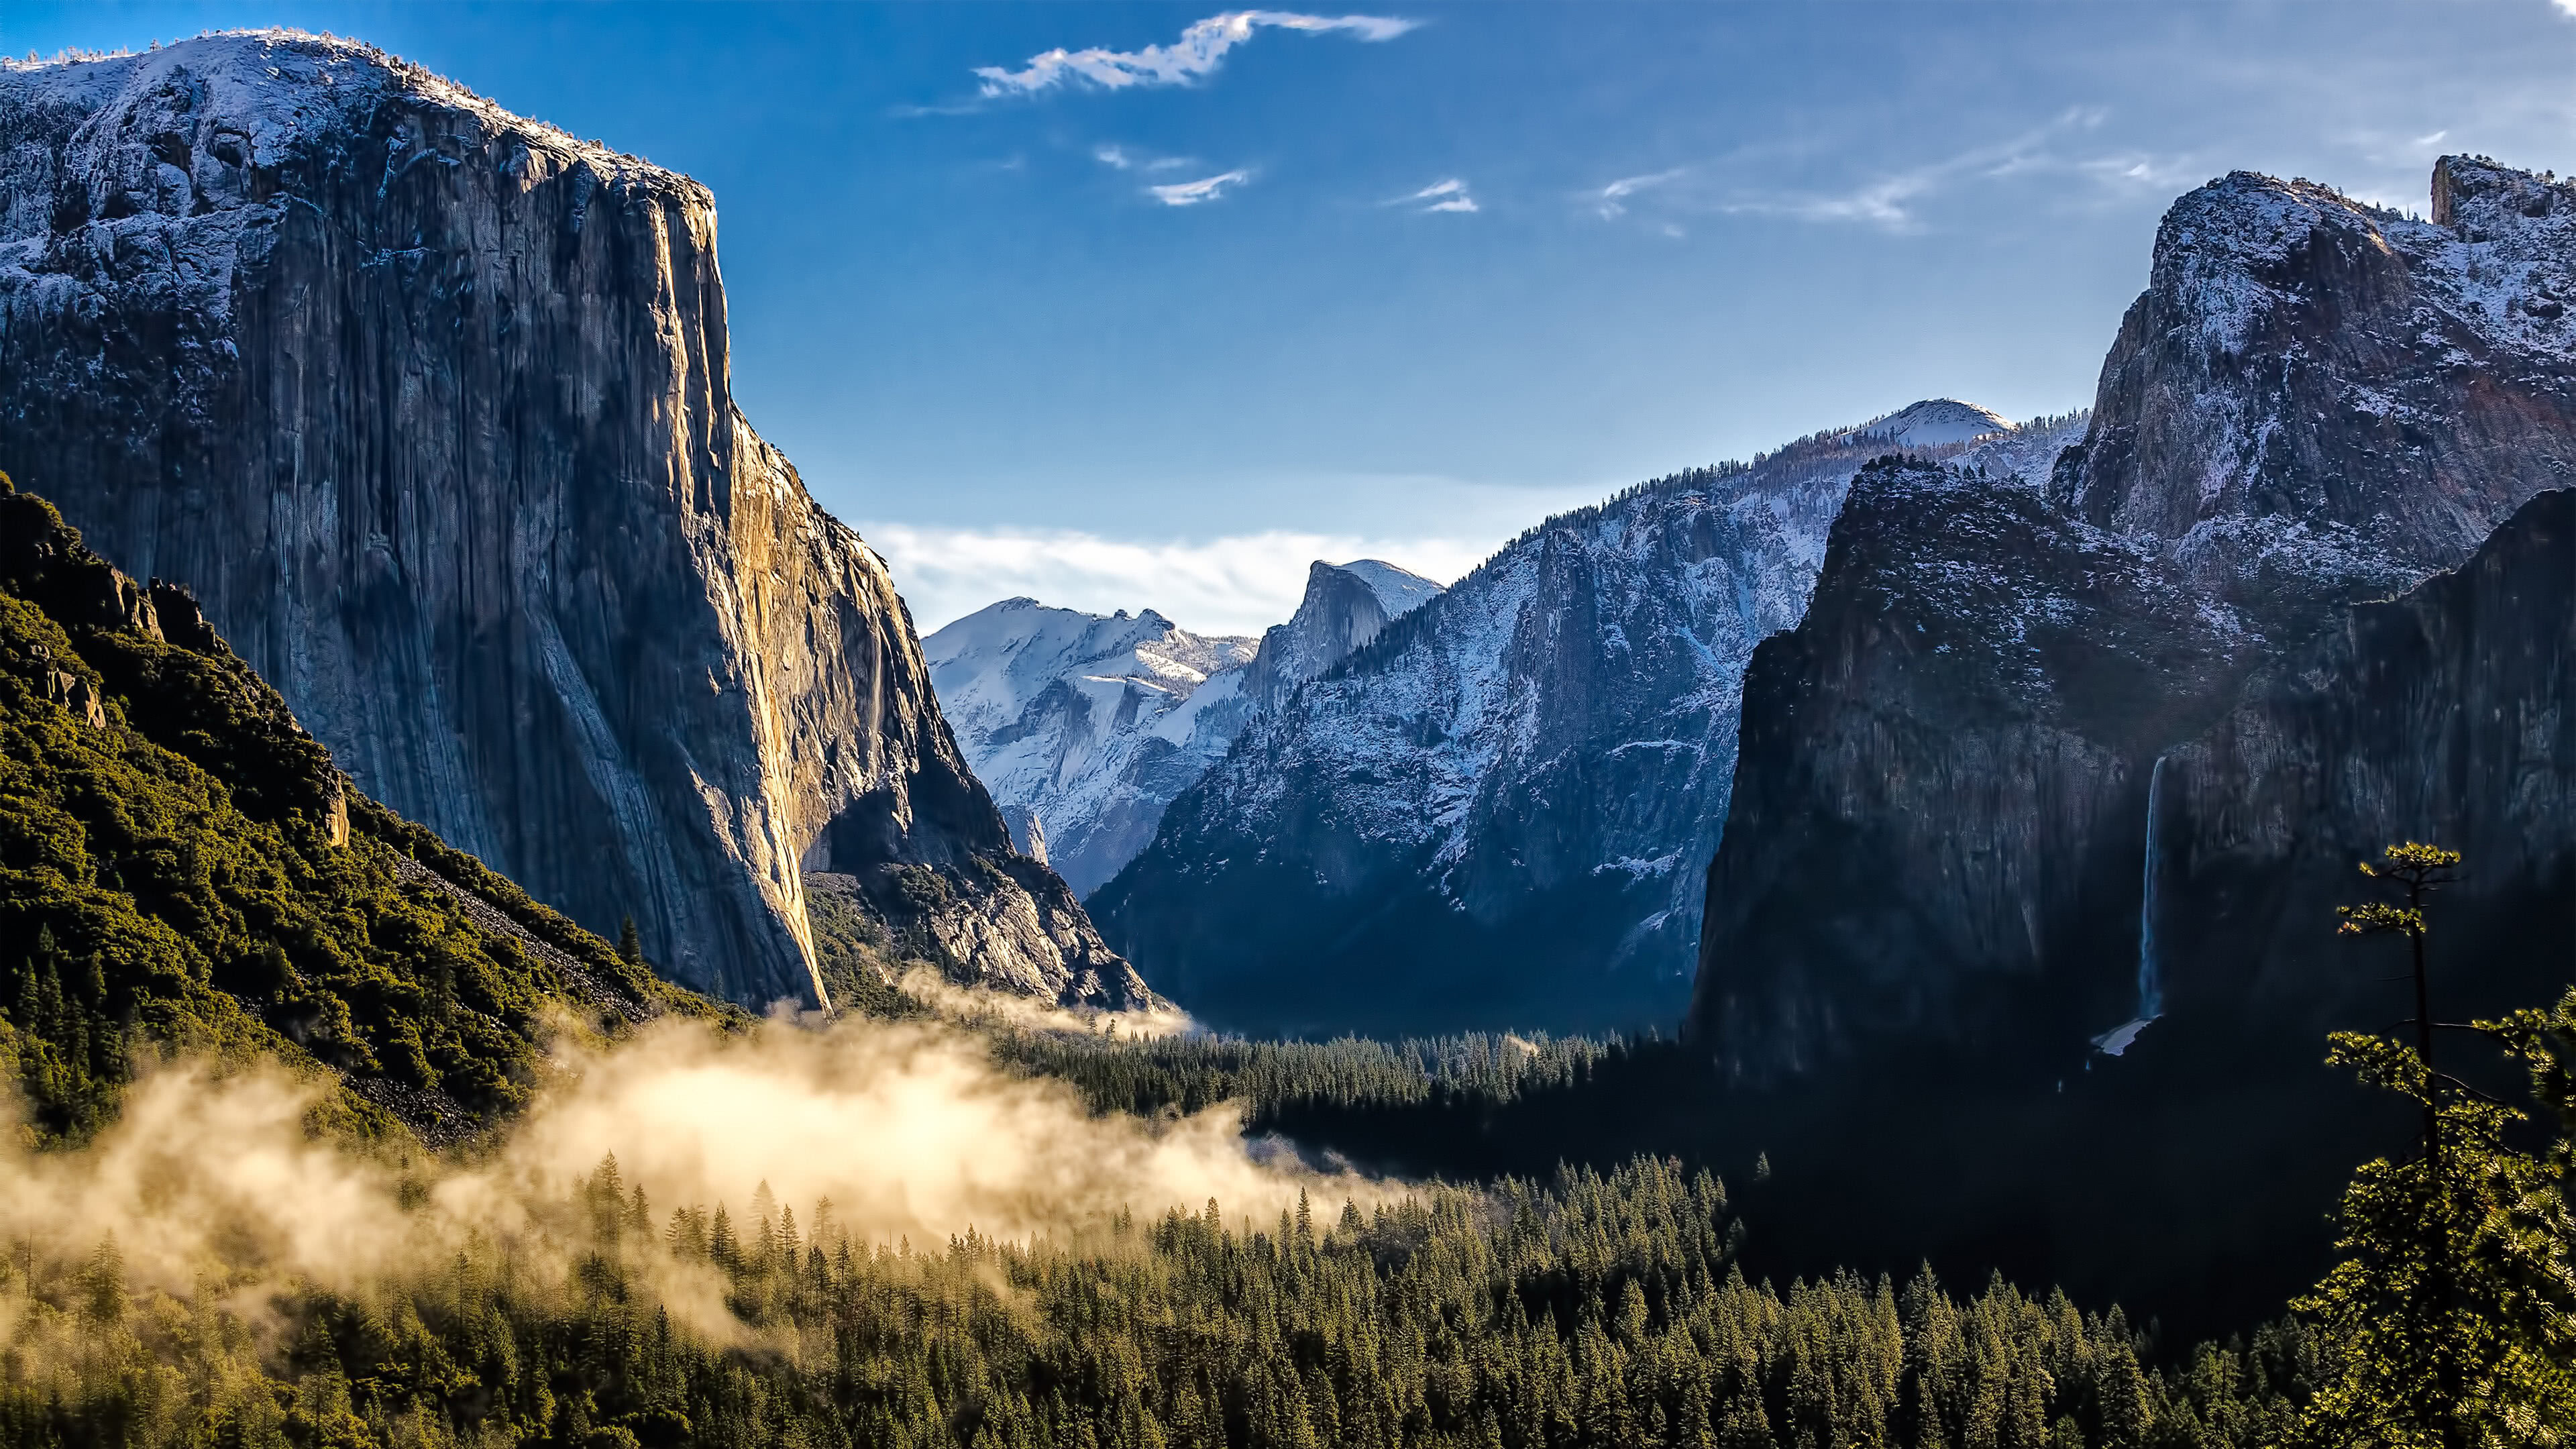 United States: El Capitan Rock Formation, Yosemite National Park, California. 3840x2160 4K Wallpaper.